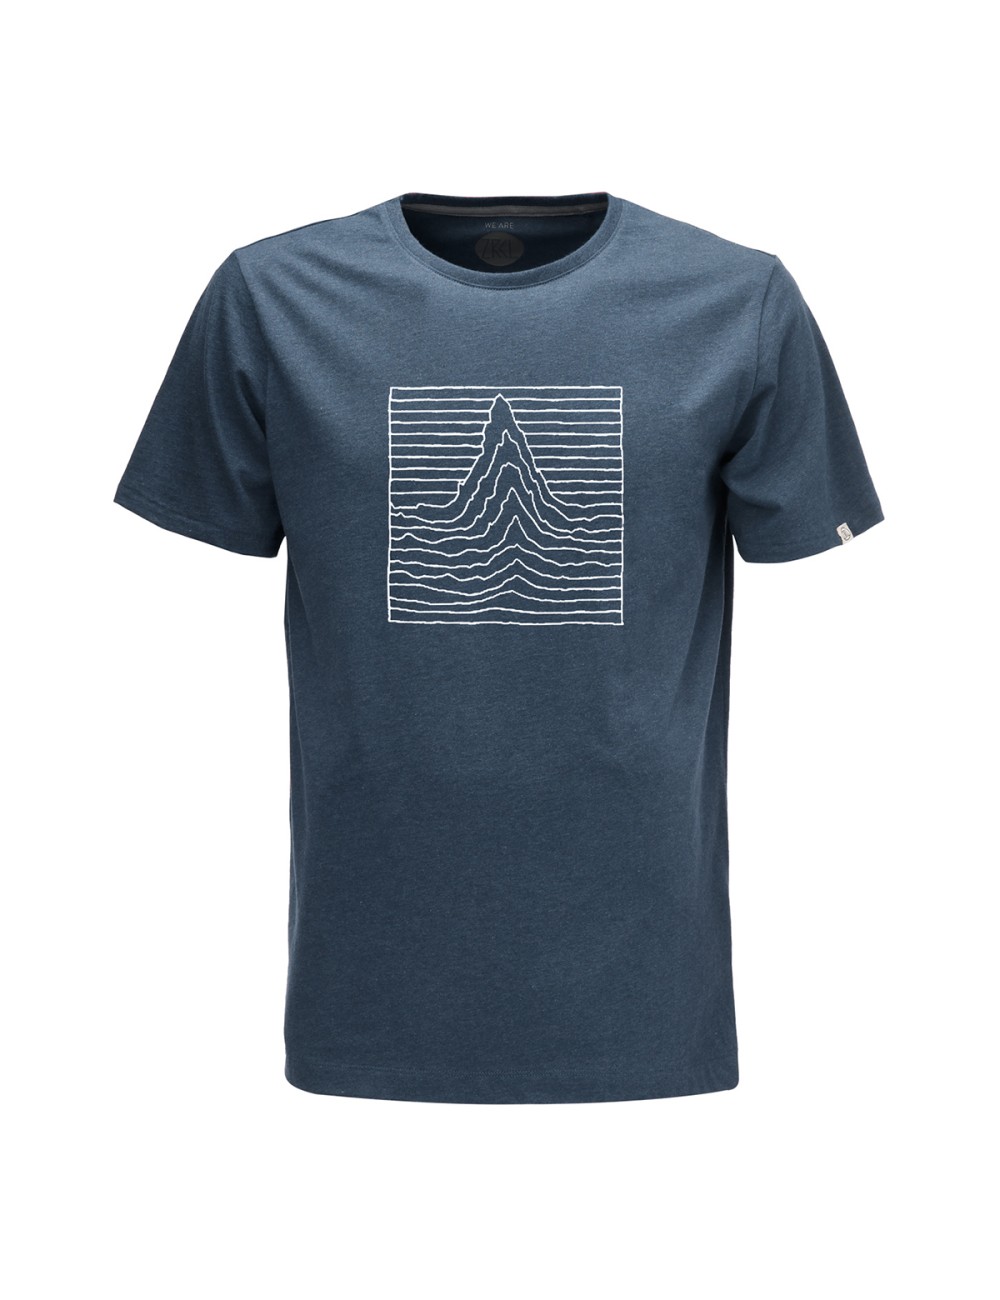 ZRCL Elevation T-Shirt - Blue Stone